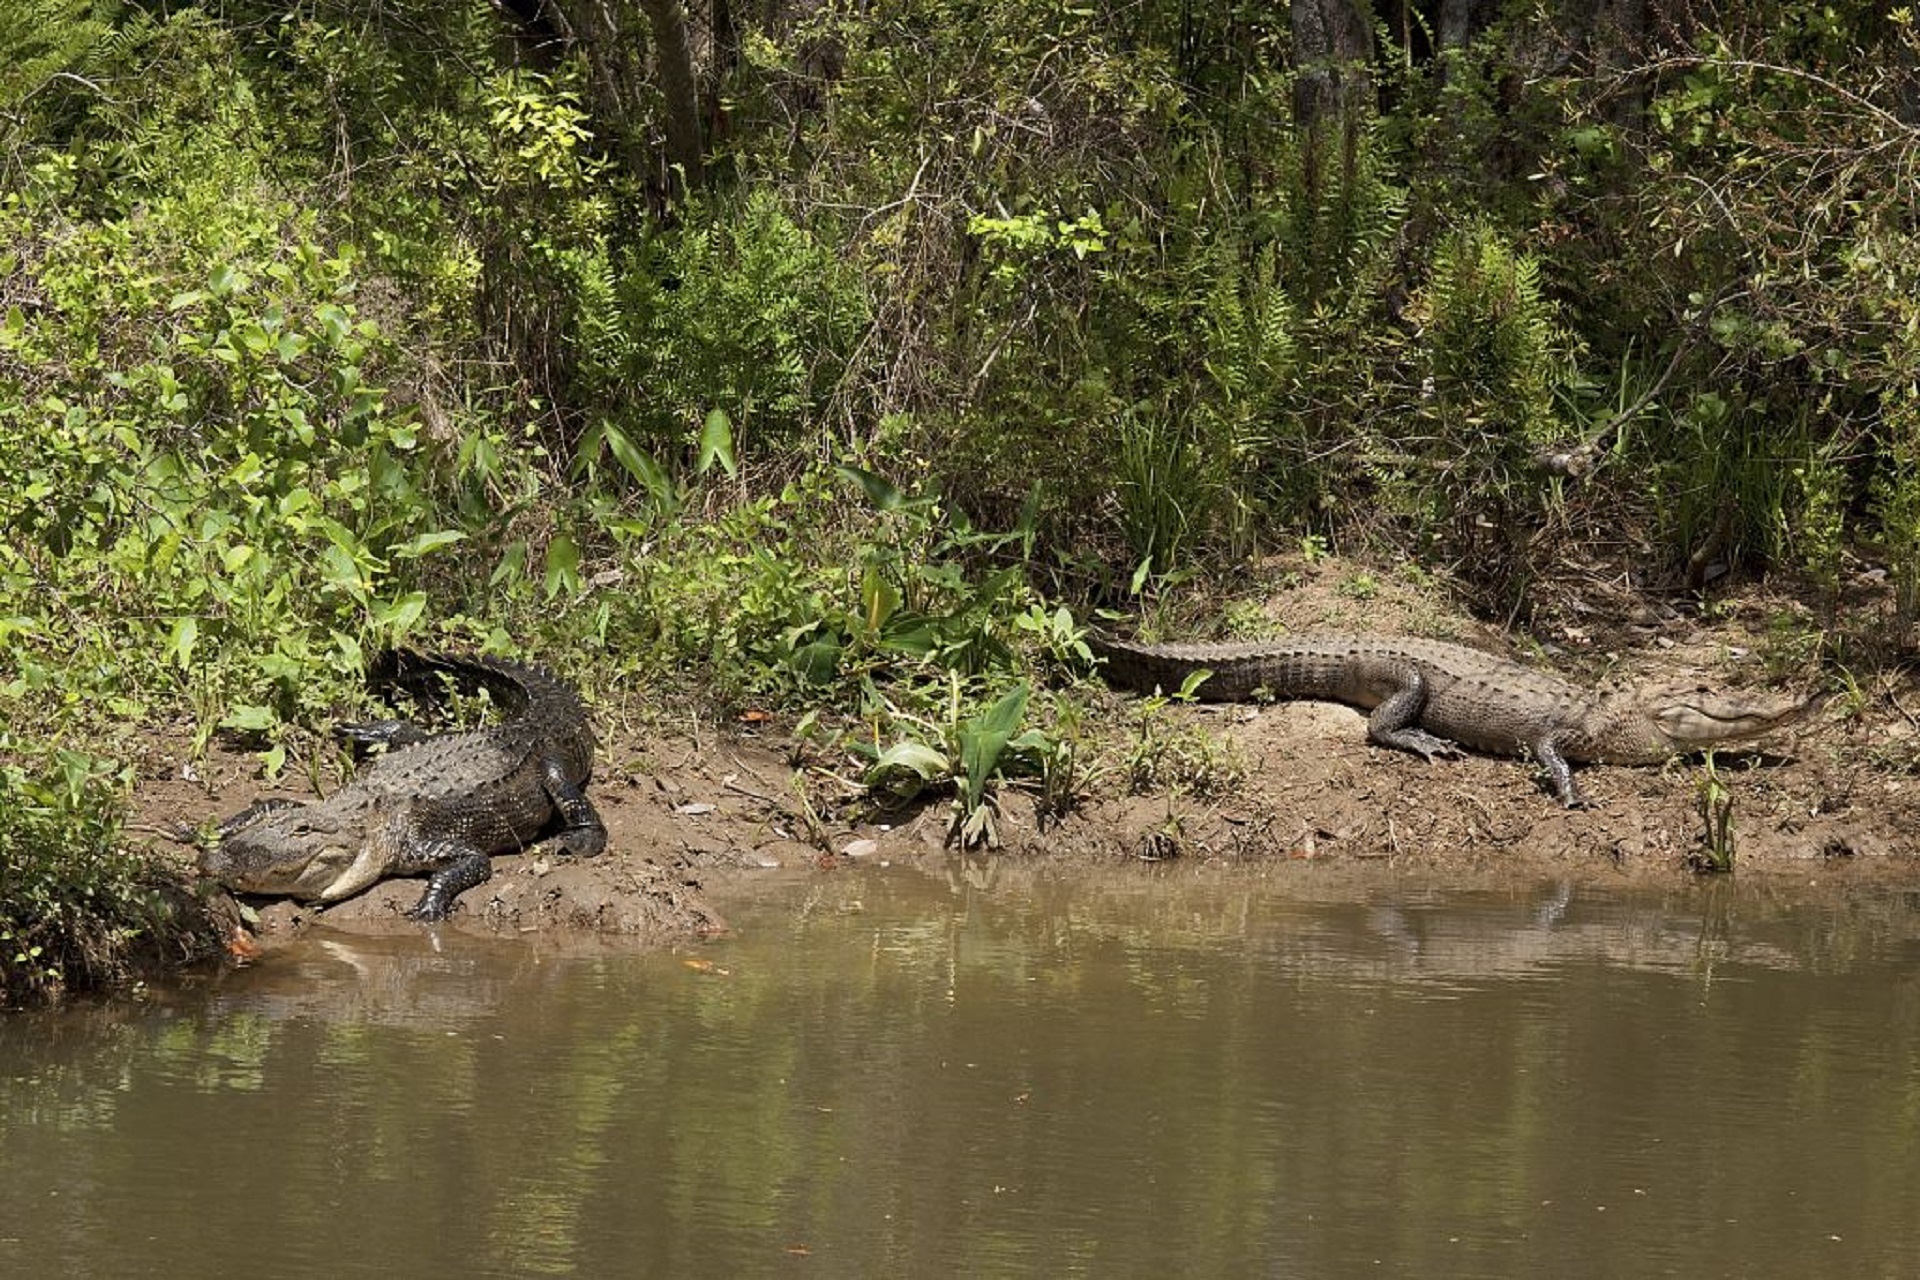 Crocodile on the shore photo